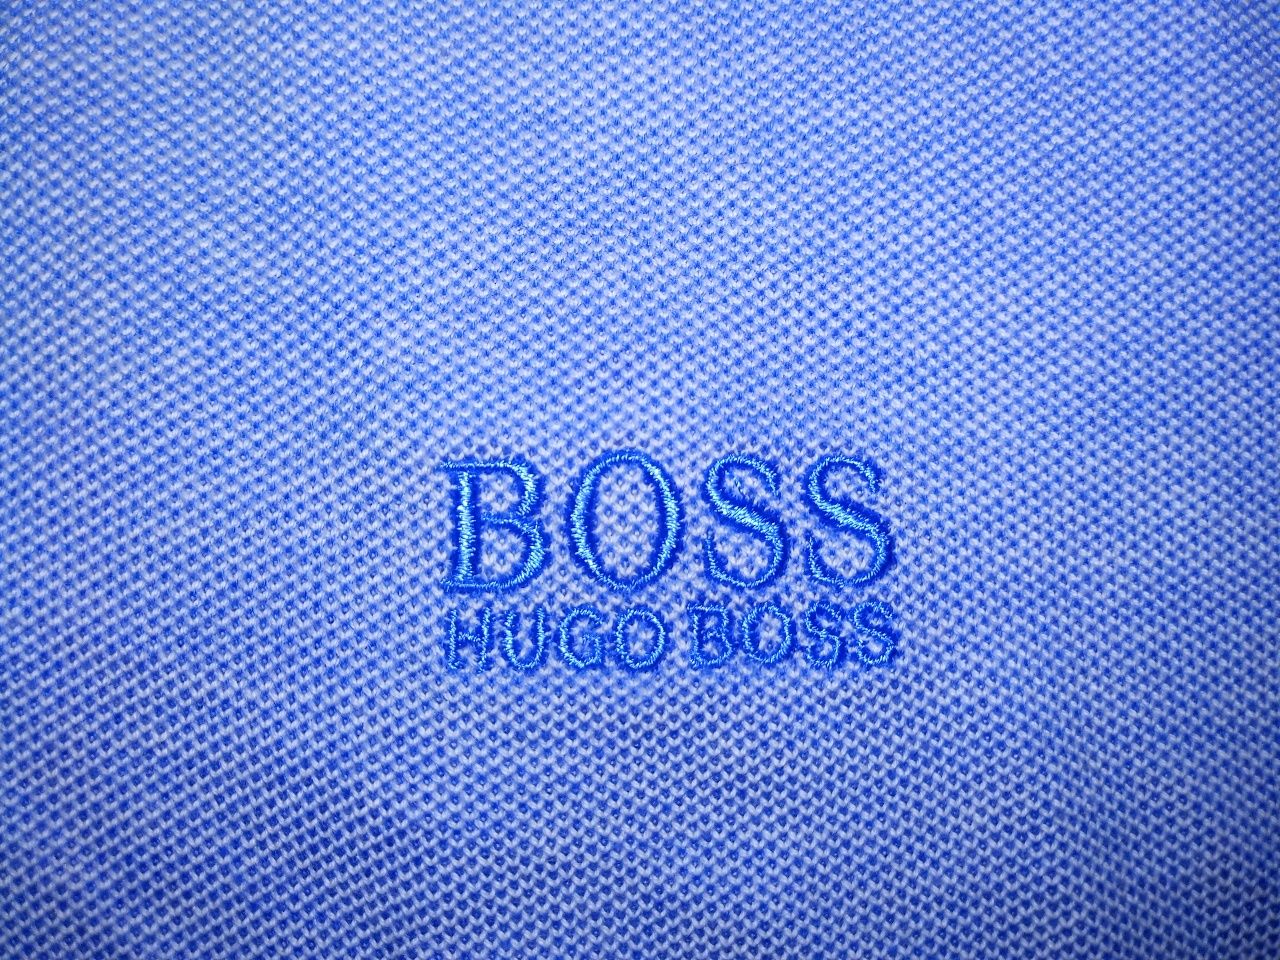 Hugo Boss koszulka rozmiar S